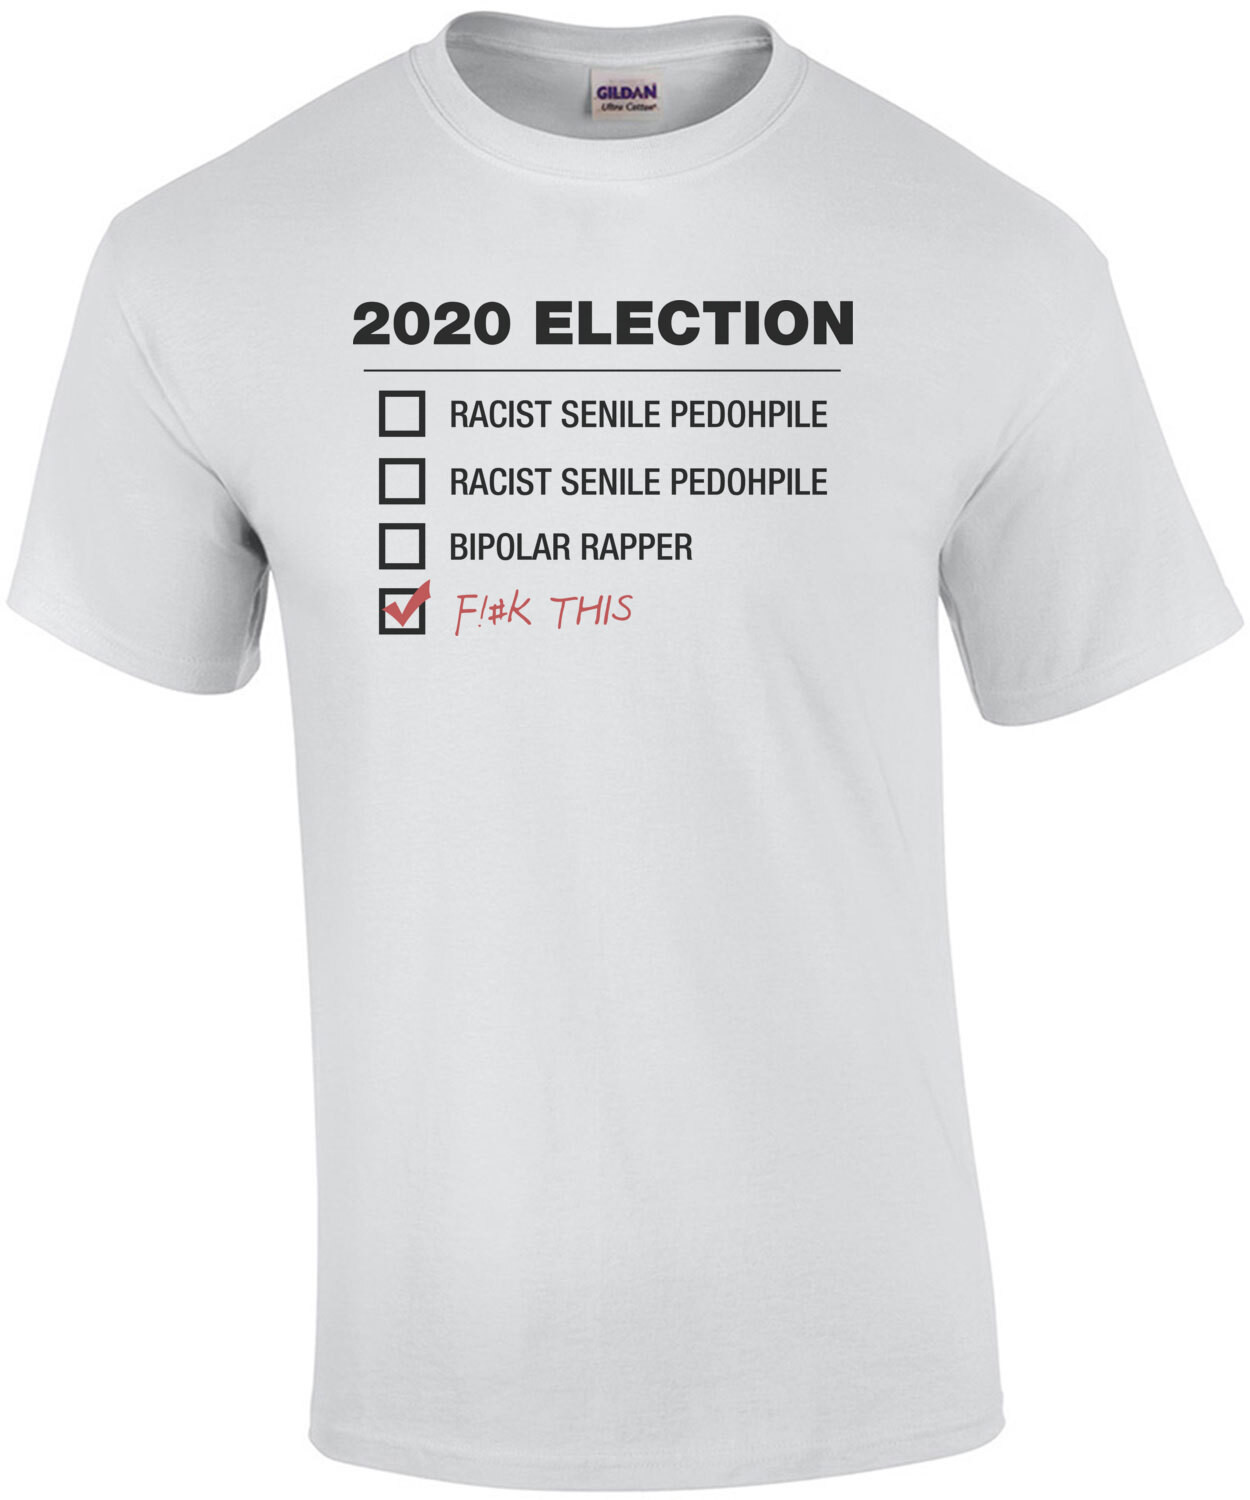 2020 Election Racist Senile Pedophile Funny Election T-Shirt